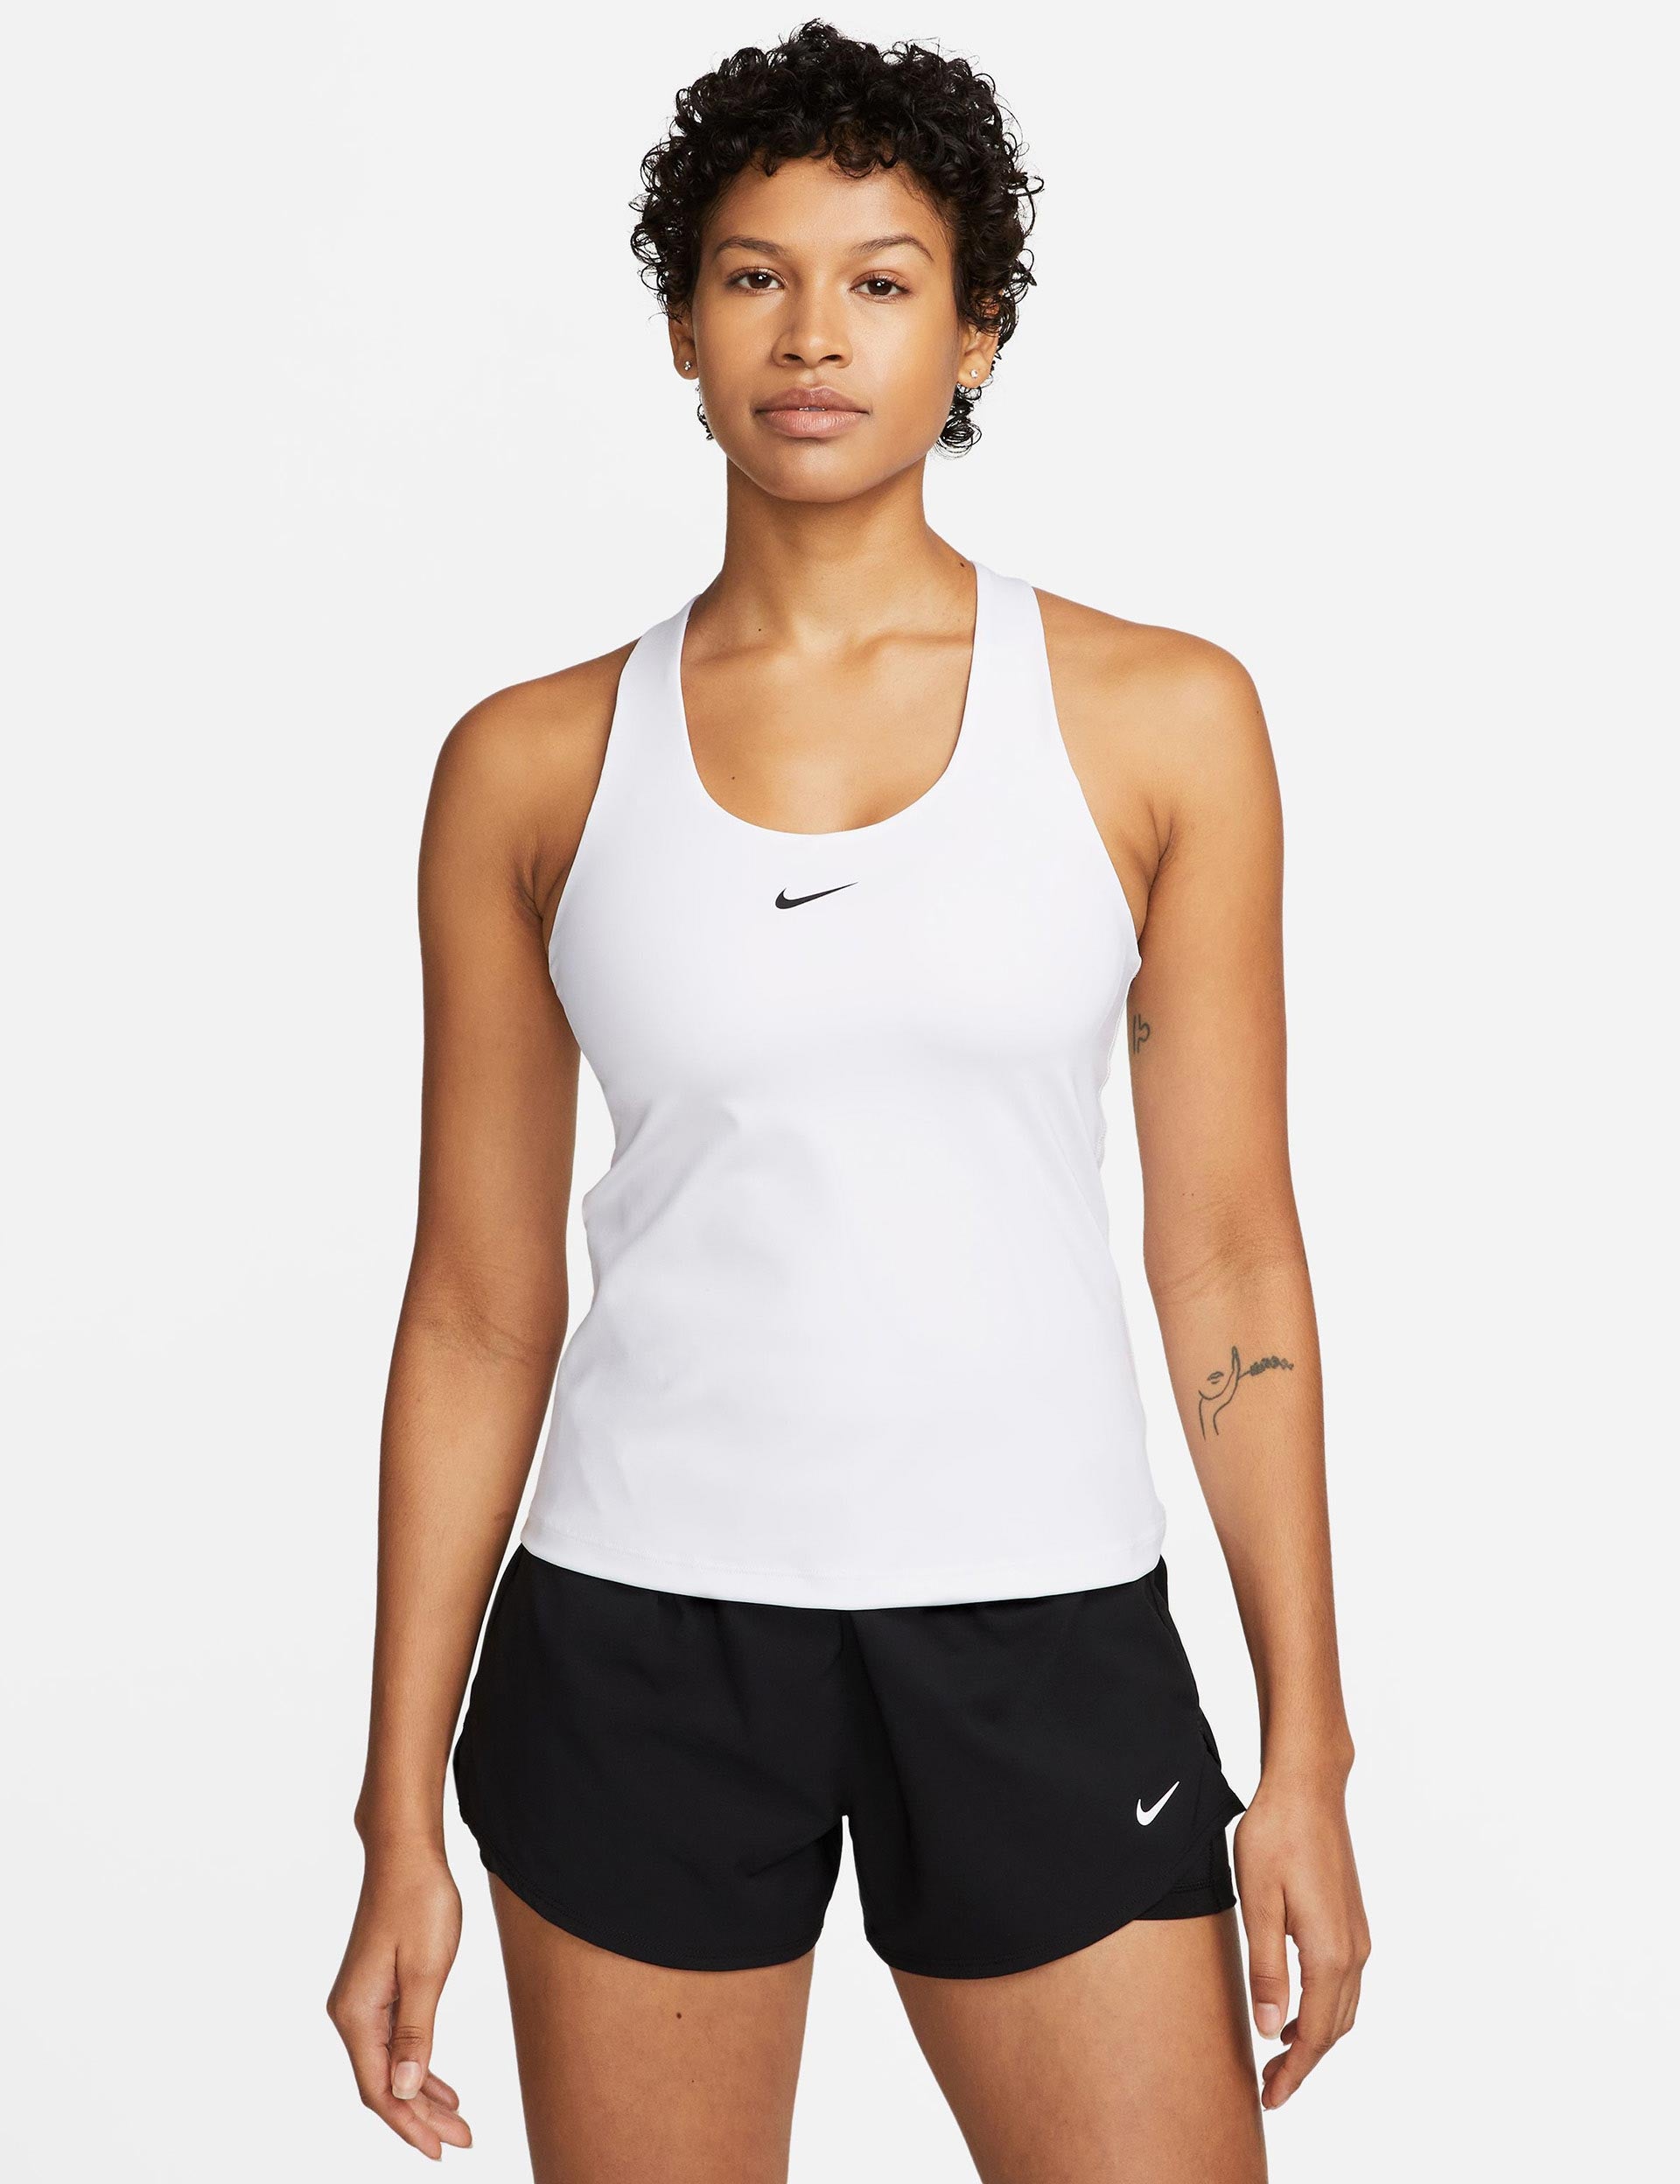 Nike Swoosh Medium Support Bra - Black/White